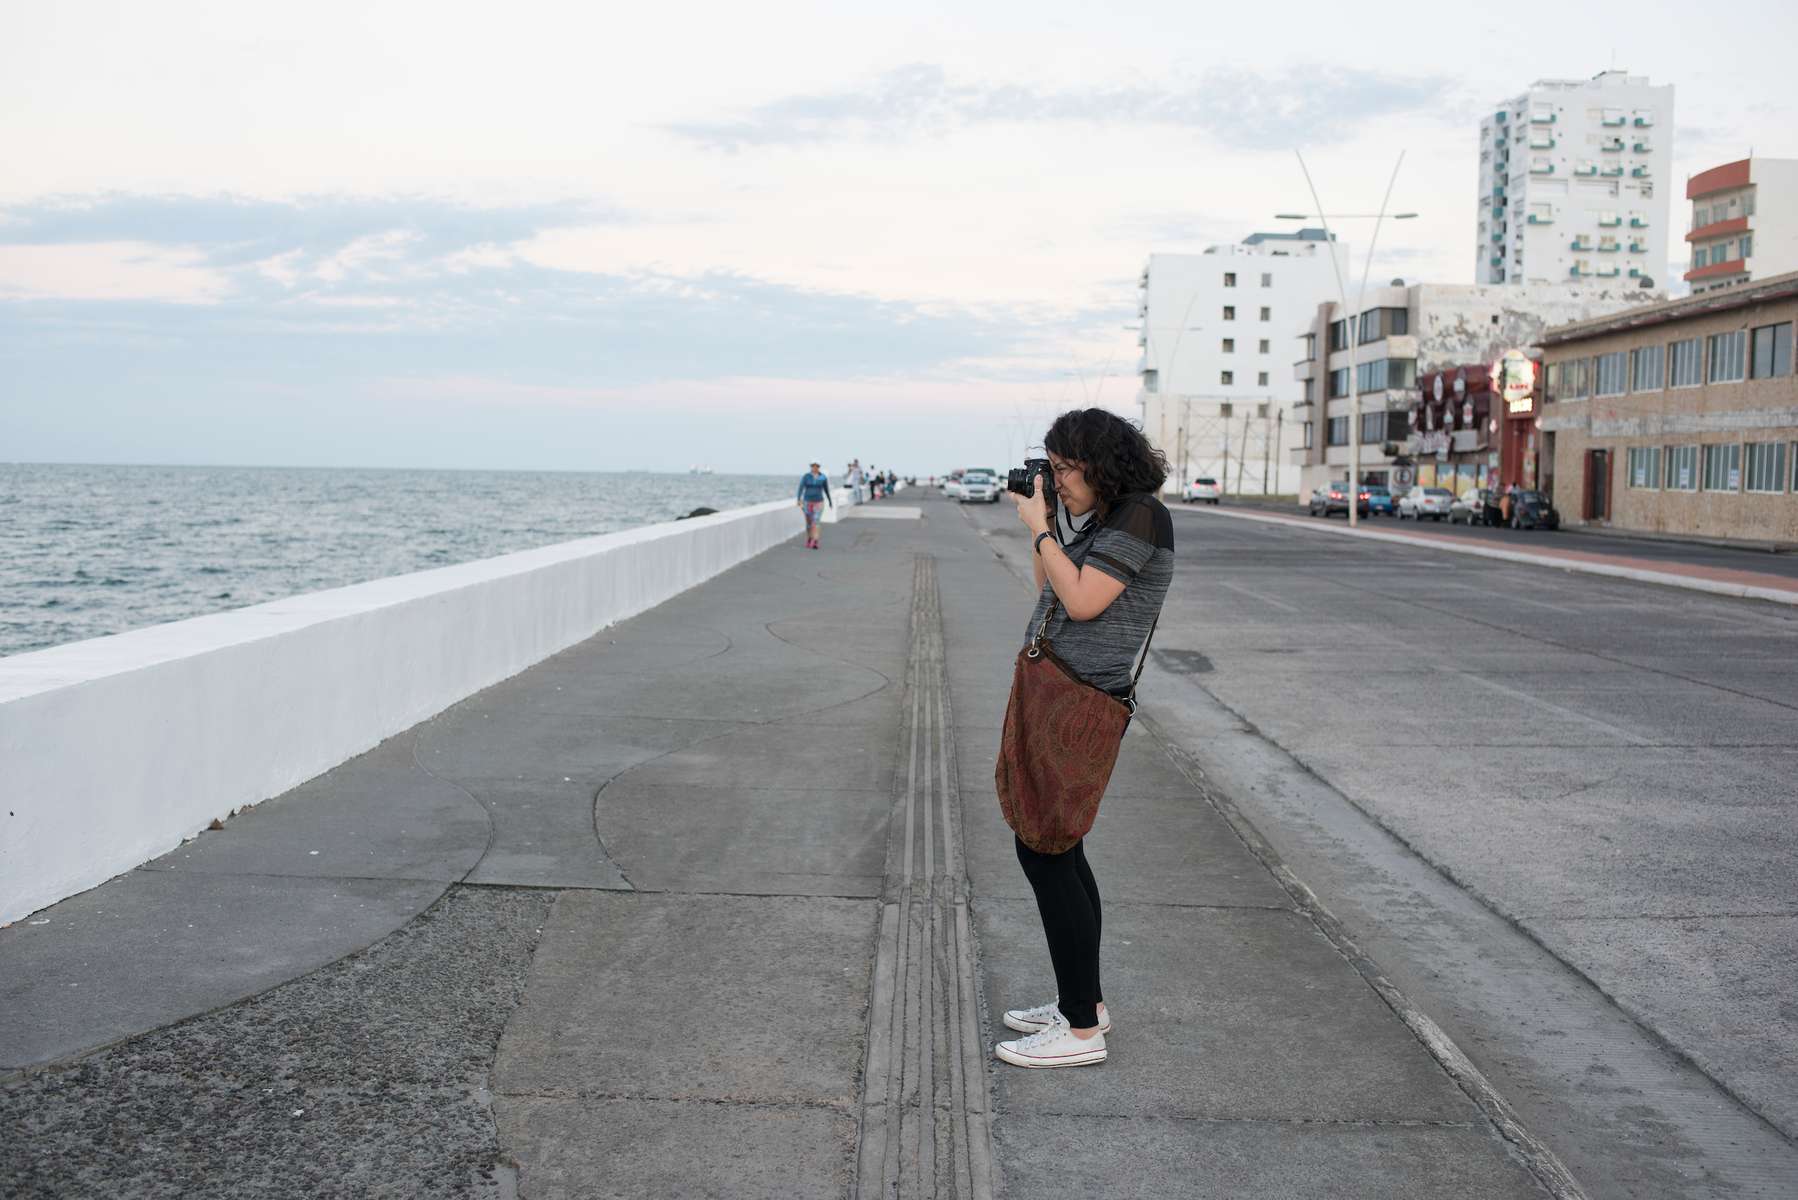 Abril, photography student. Malecon boardwalk from Boca del Rio to port. Puerto de Veracruz, Mexico